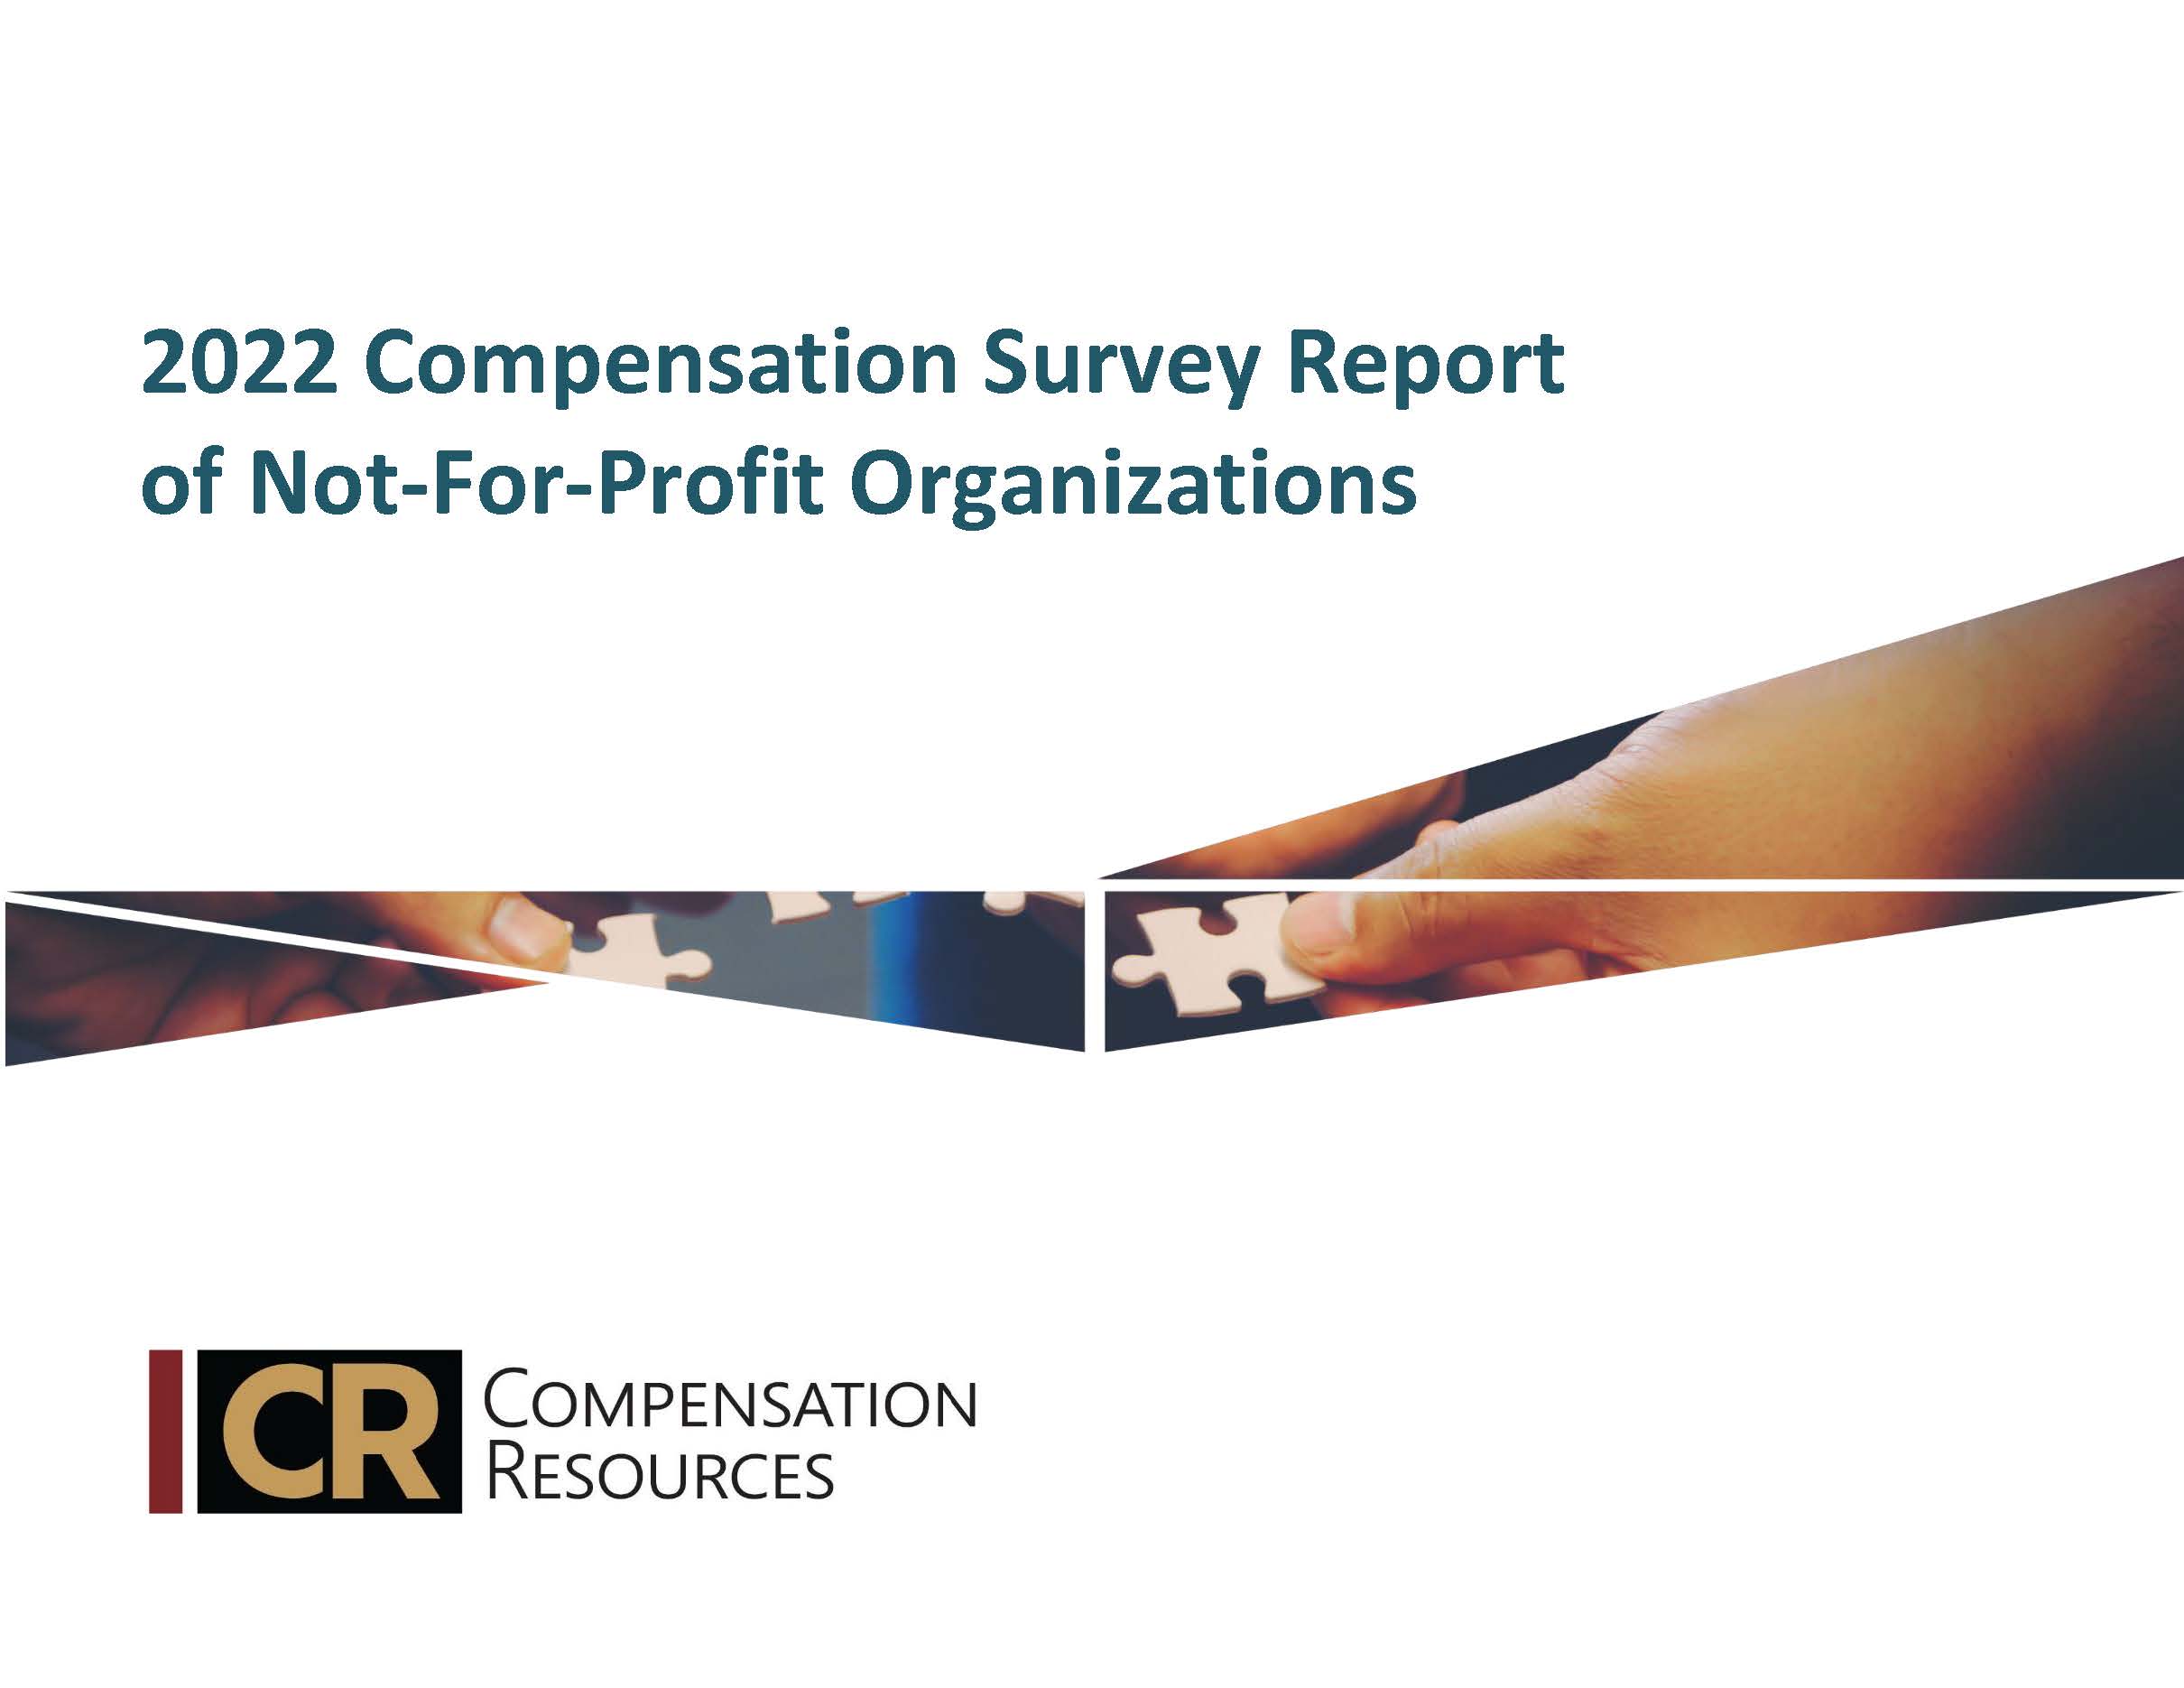 2022 Compensation Survey Report of Not-for-Profit Organizations